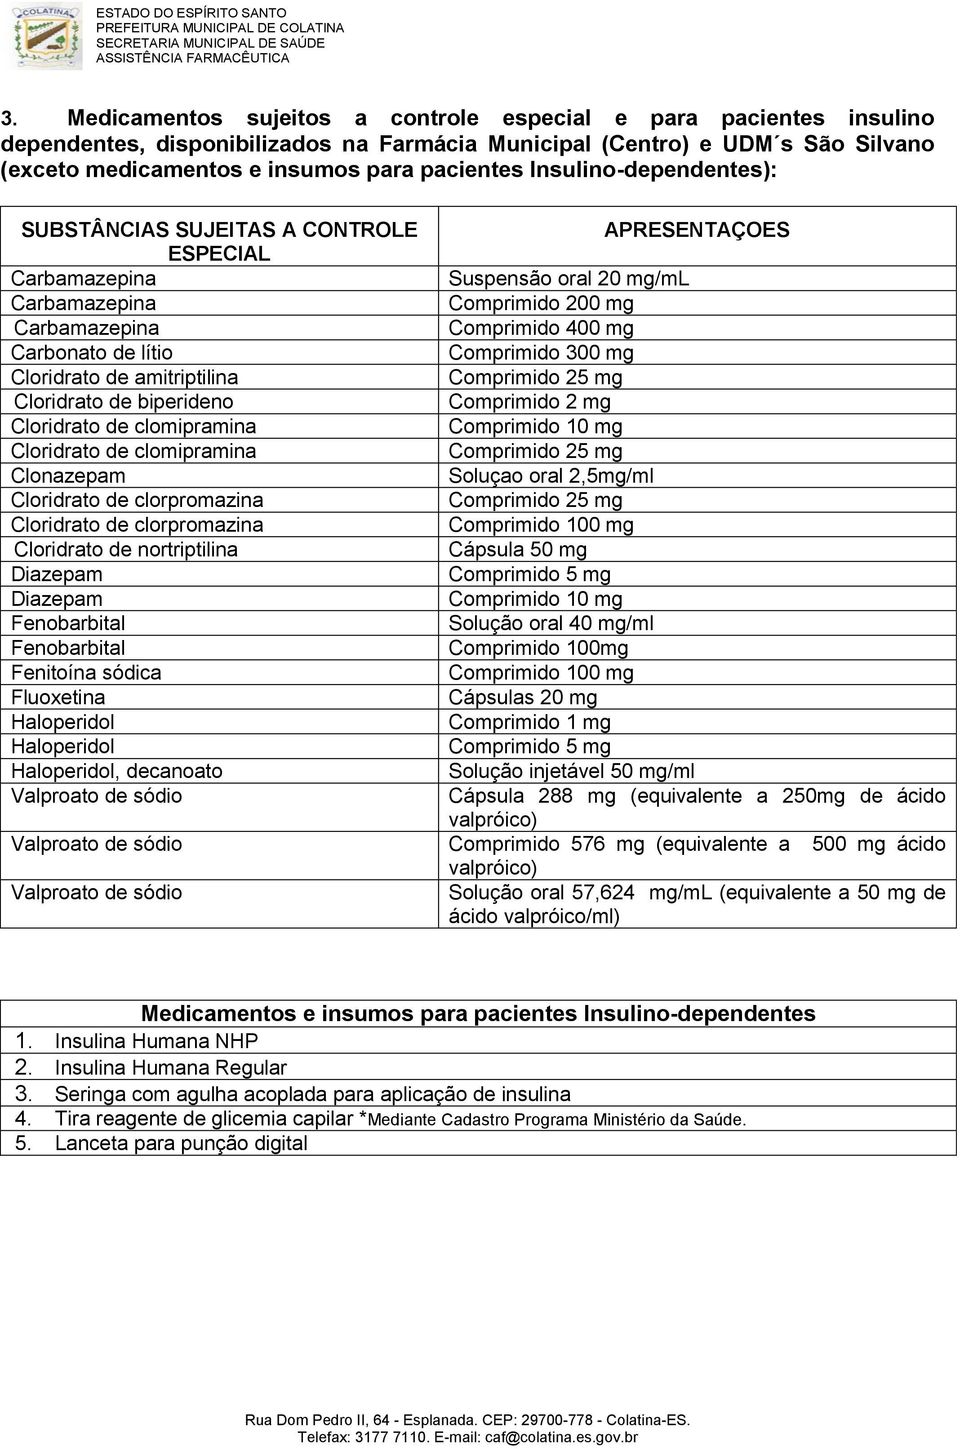 biperideno Comprimido 2 mg Cloridrato de clomipramina Cloridrato de clomipramina Clonazepam Soluçao oral 2,5mg/ml Cloridrato de clorpromazina Cloridrato de clorpromazina Cloridrato de nortriptilina